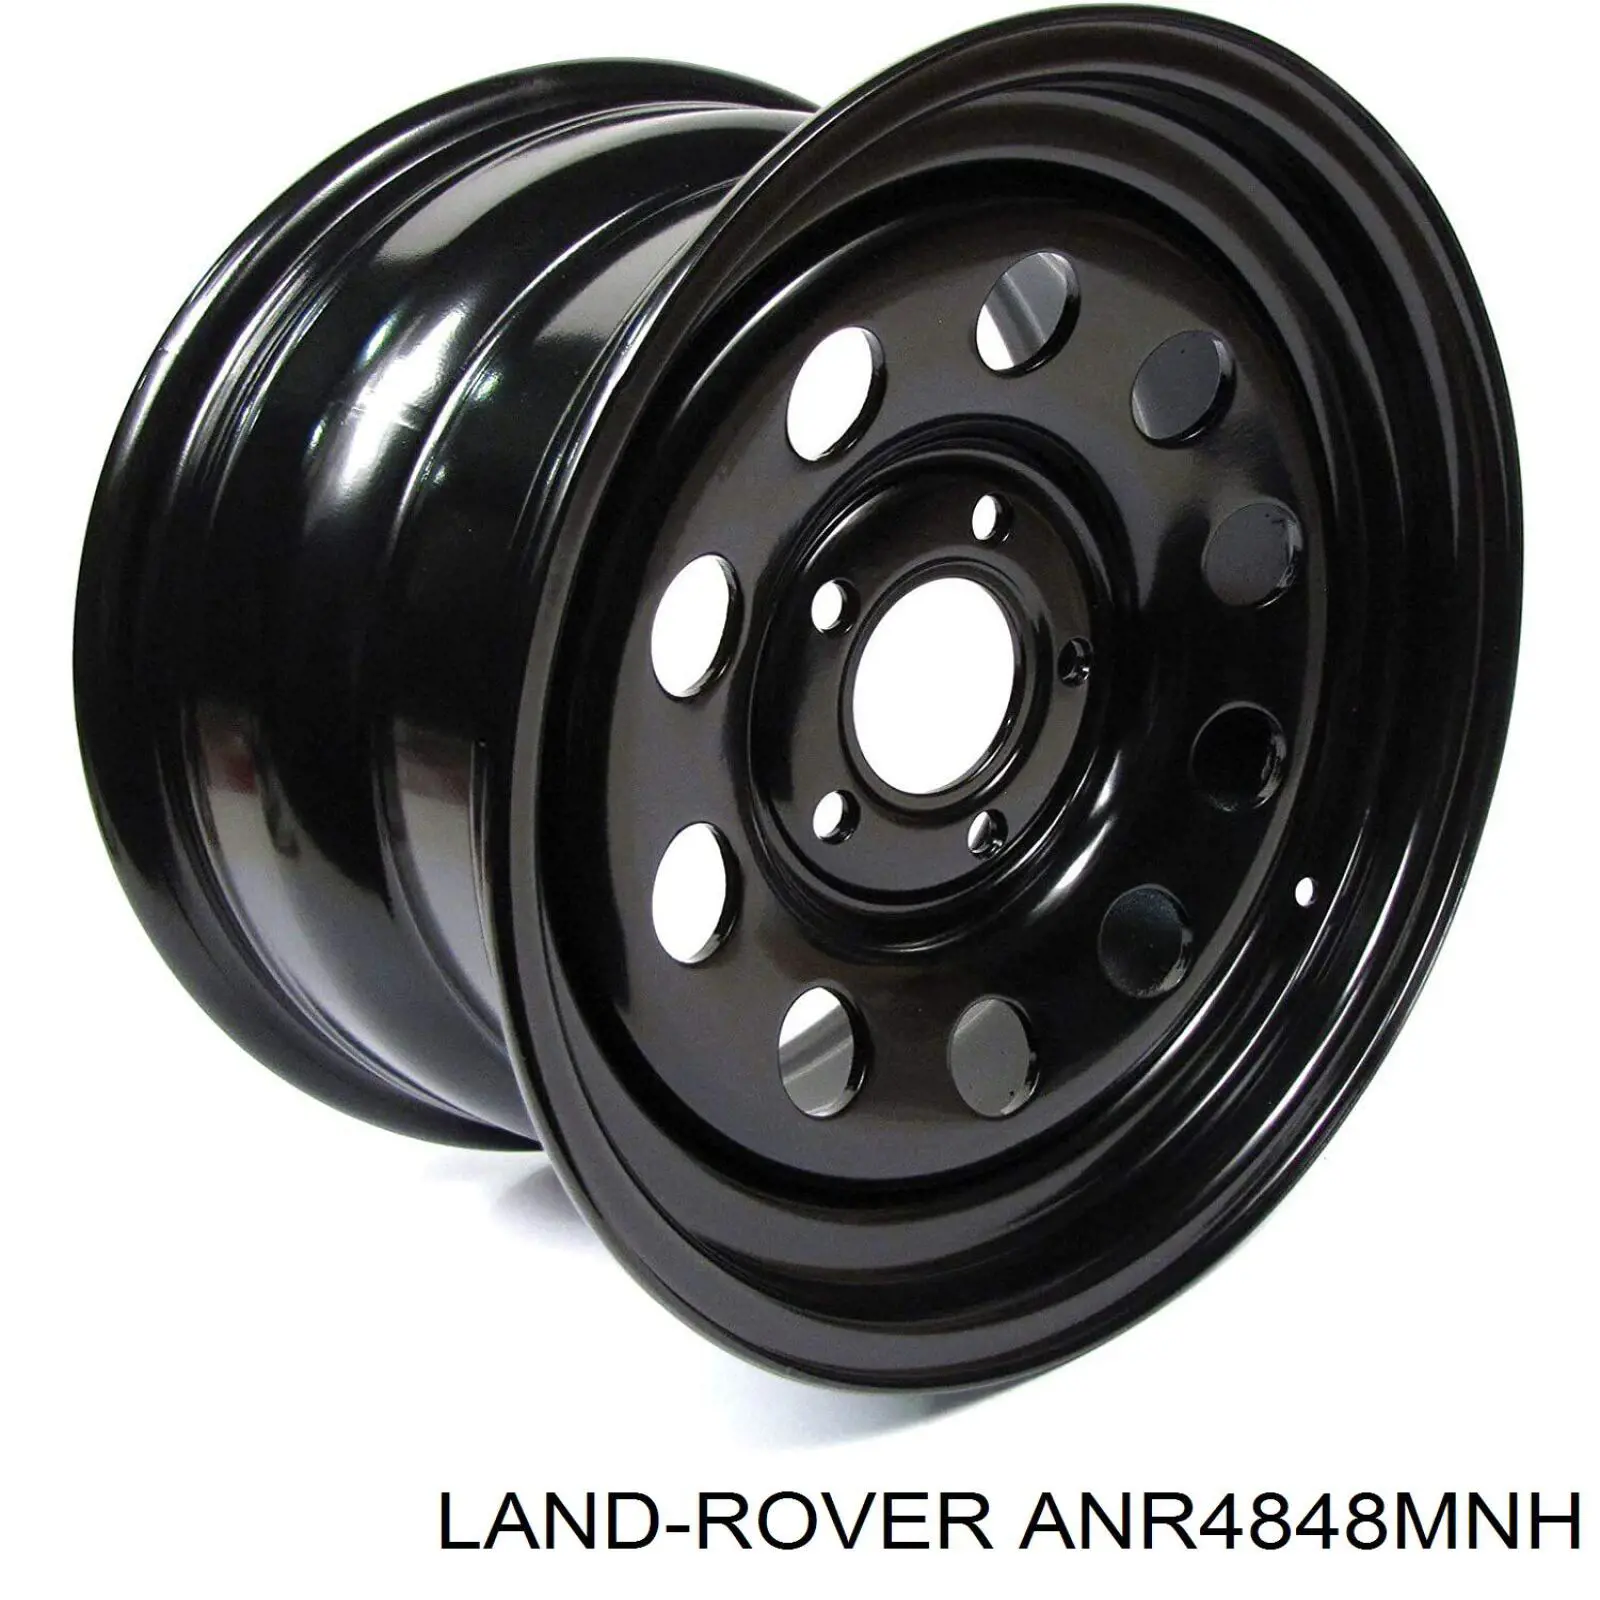 ANR4848MNH Land Rover llantas de aleacion, (aleacion de titanio)